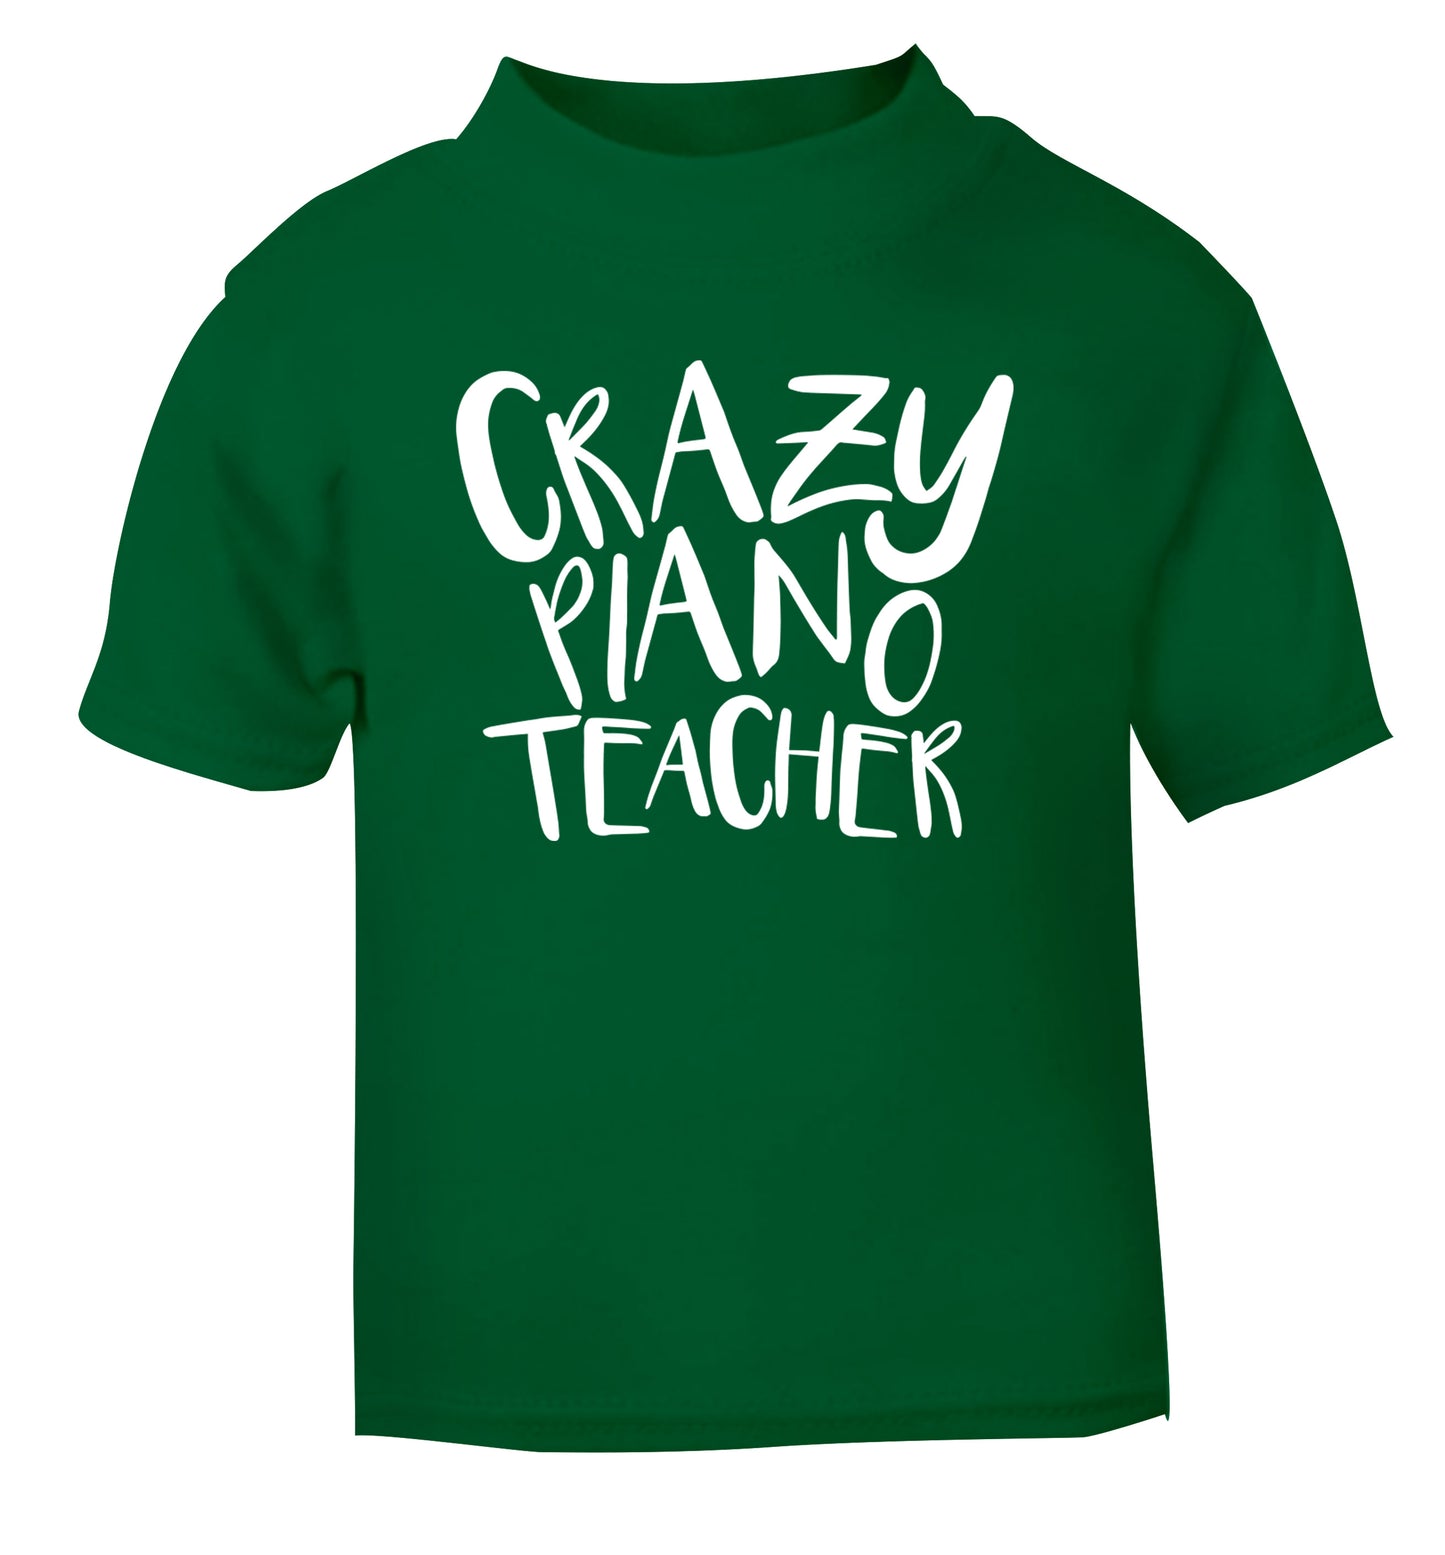 Crazy piano teacher green Baby Toddler Tshirt 2 Years